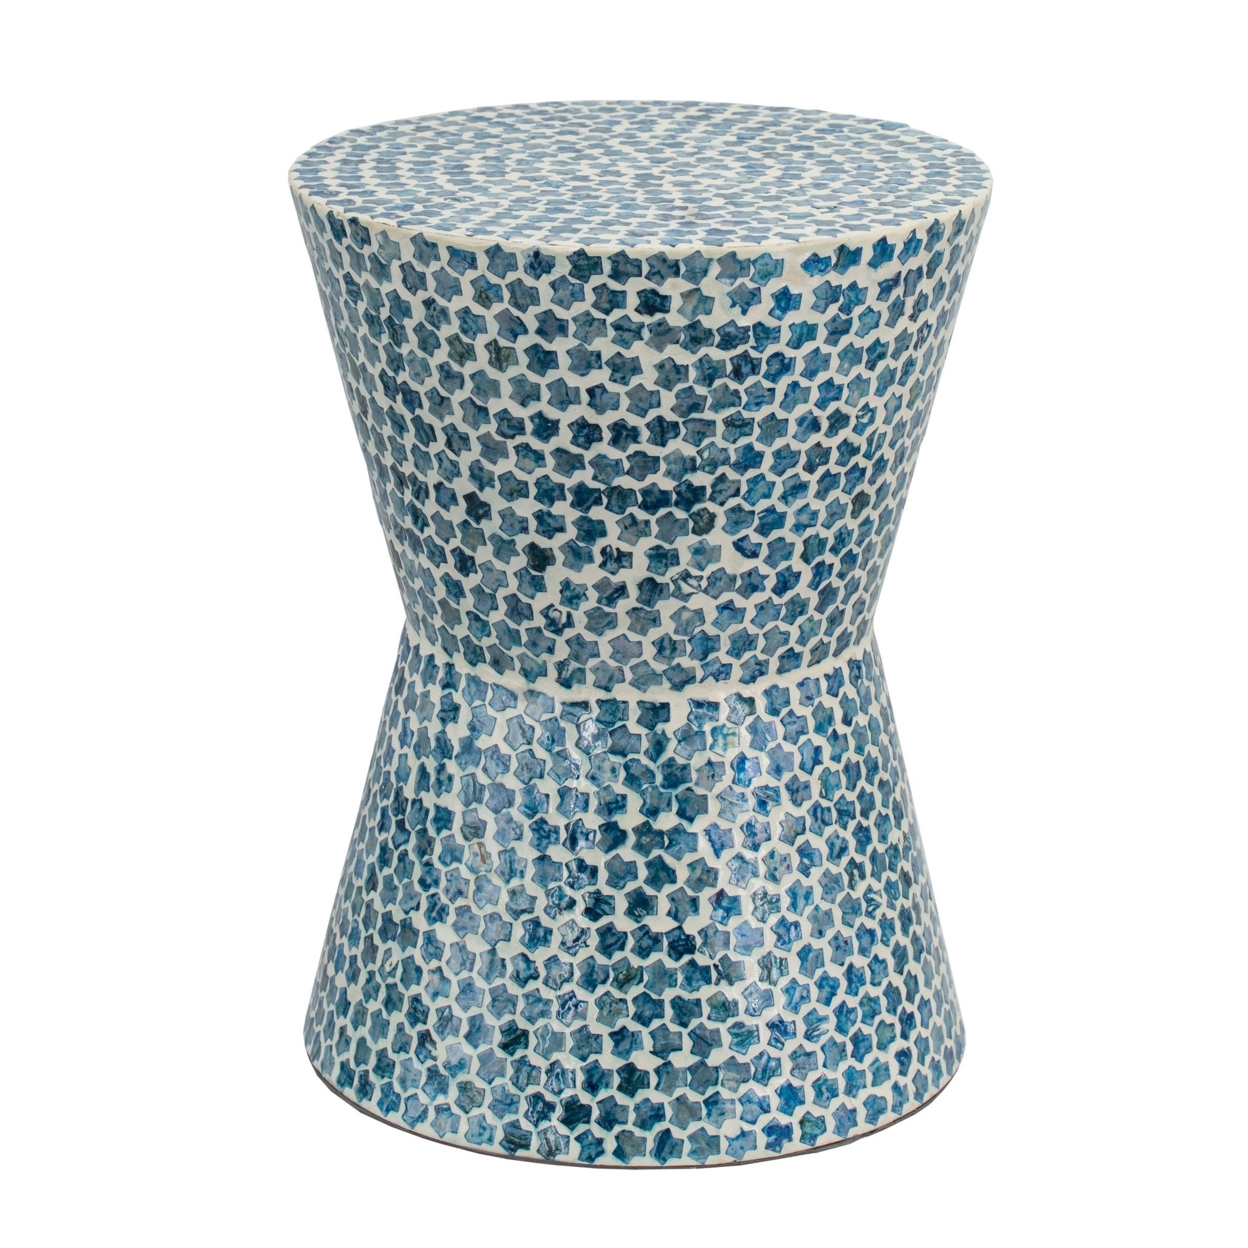 Ivy 20 Inch Luxury Accent Table Stool, Mosaic Tile Pattern, White, Blue- Saltoro Sherpi